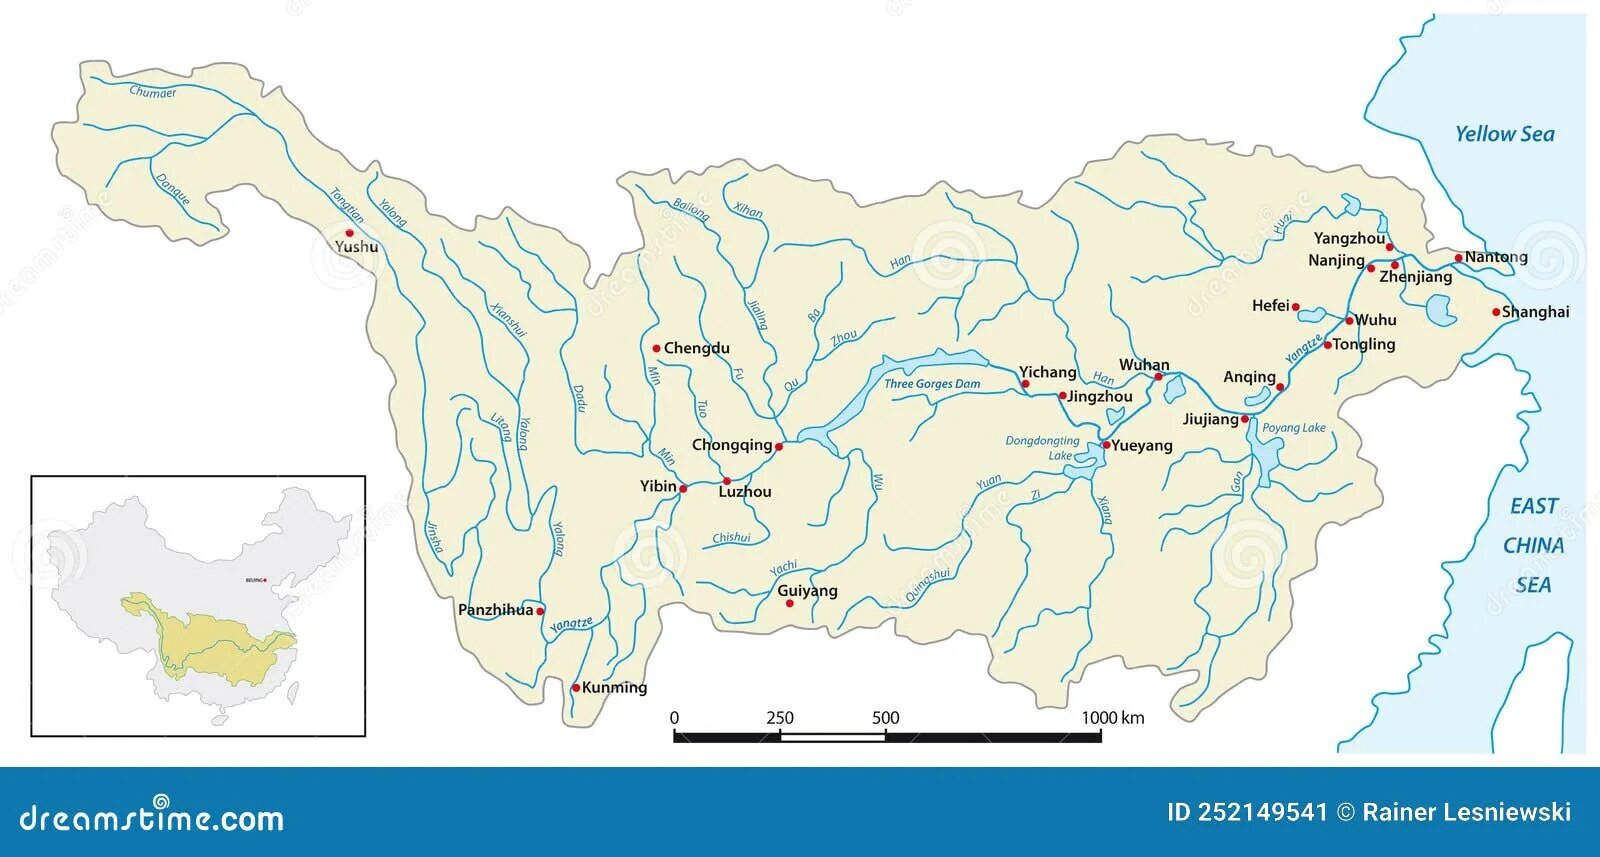 Где на контурной карте находится река янцзы. Бассейн реки Янцзы. Бассейн реки Янцзы на карте. Река Янцзы на карте. Долина реки Янцзы на карте.